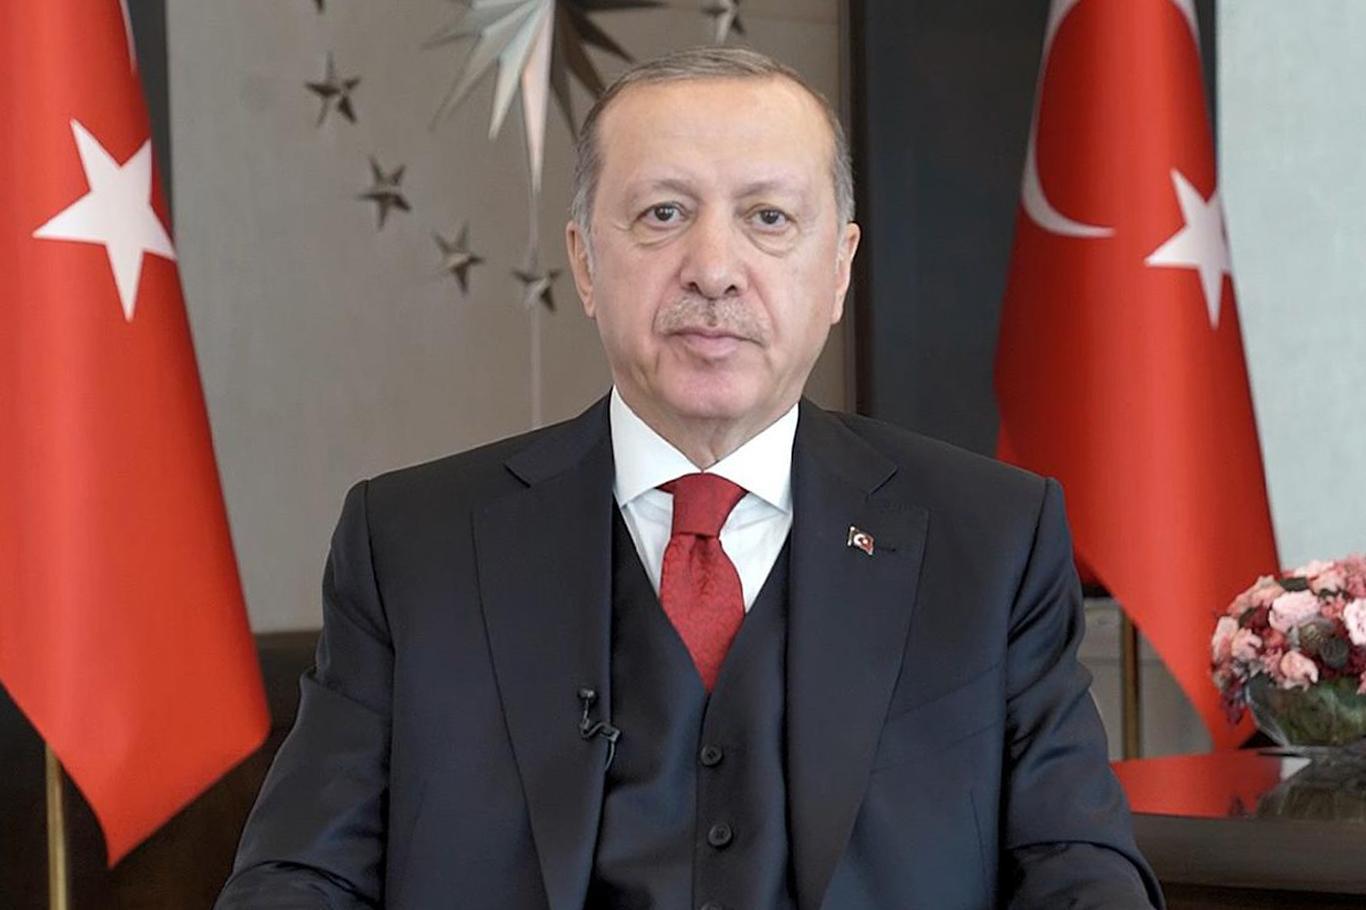 Erdoğan offers his condolences to Lebanese people